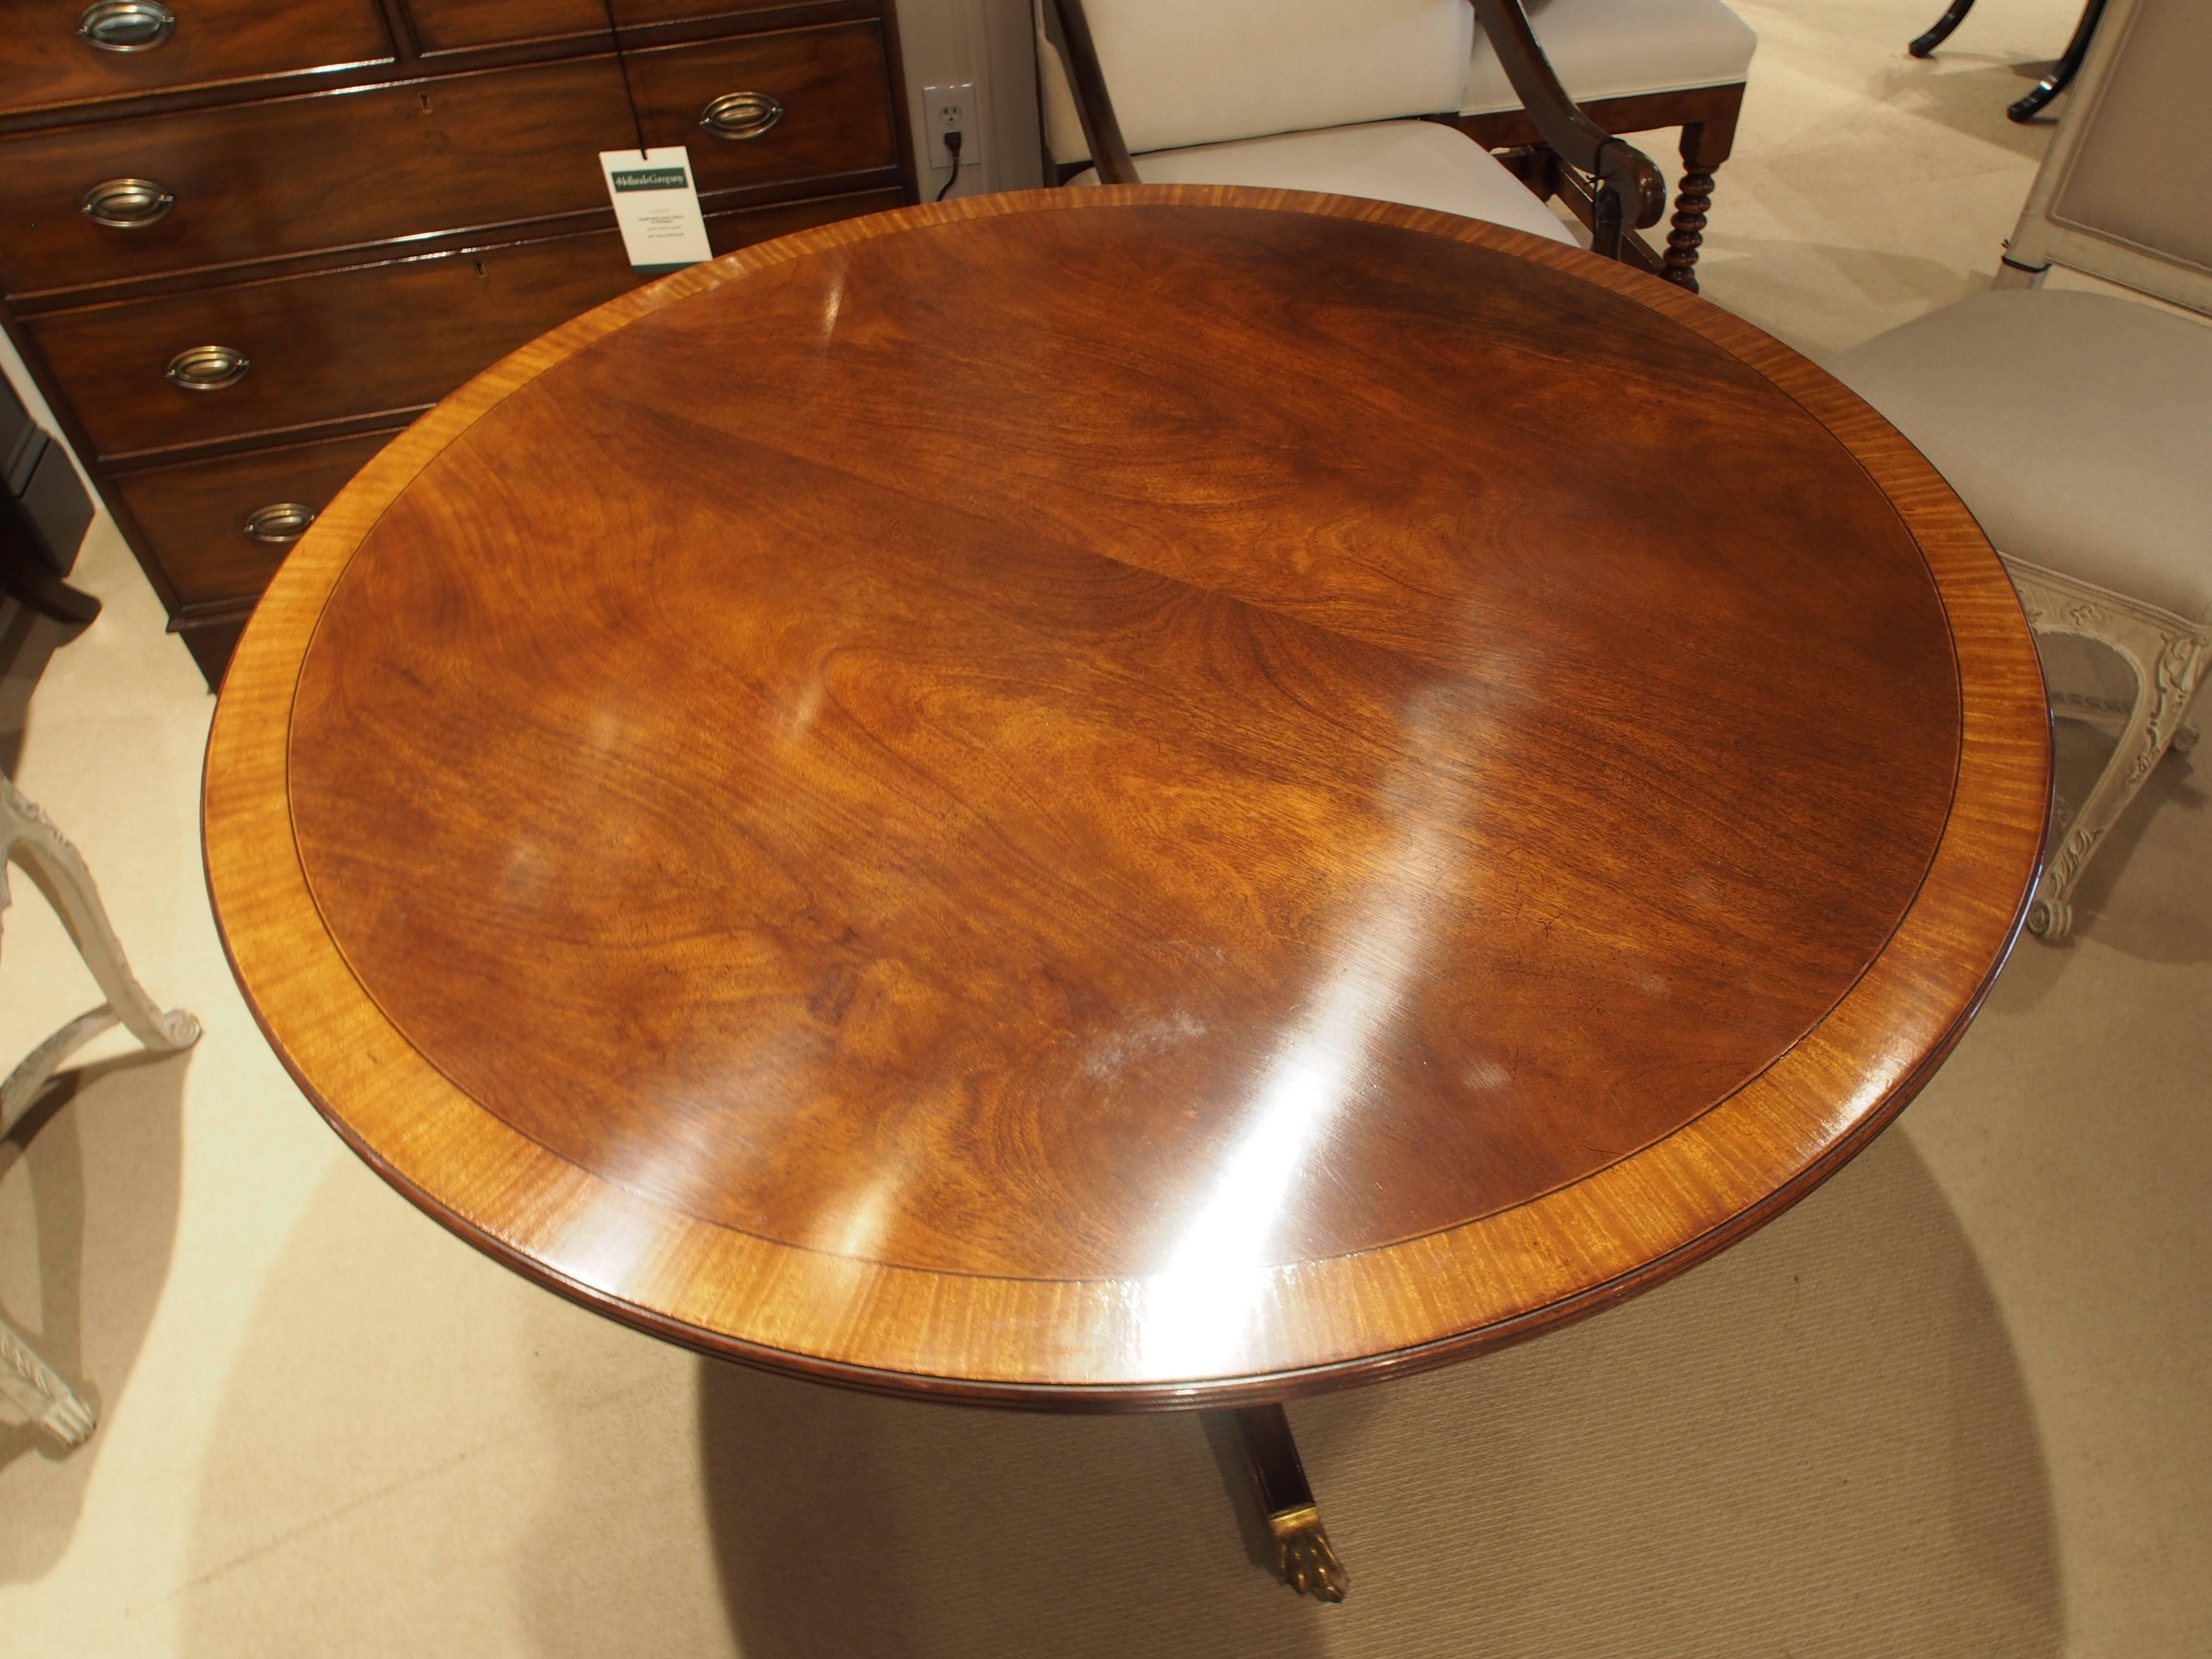 Sheraton pedestal table in medium mahogany with banding.